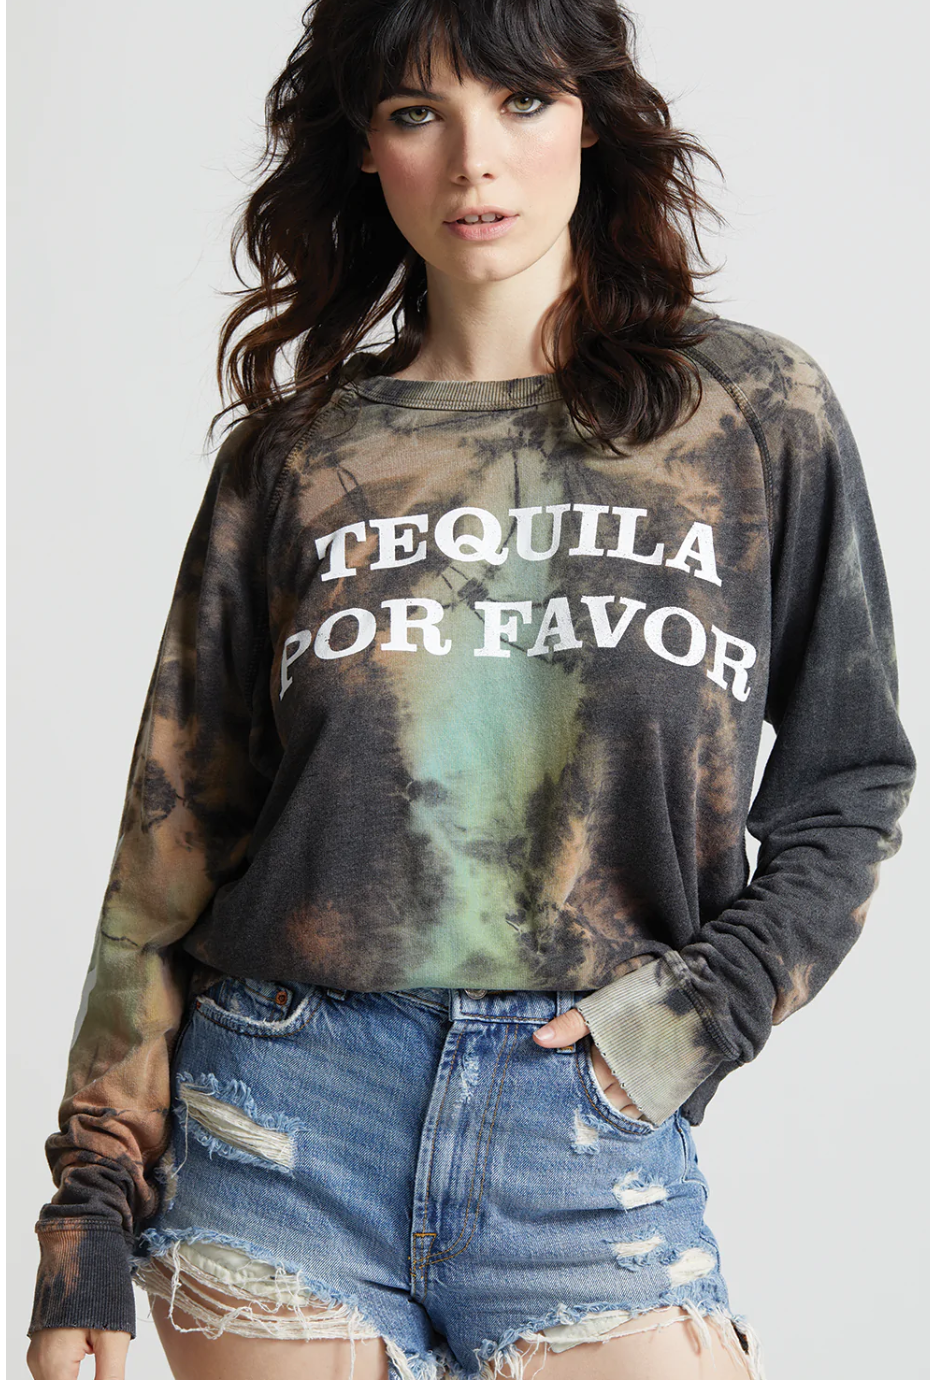 Tequila Por Favor Tie Dye - Recycled Karma Brands